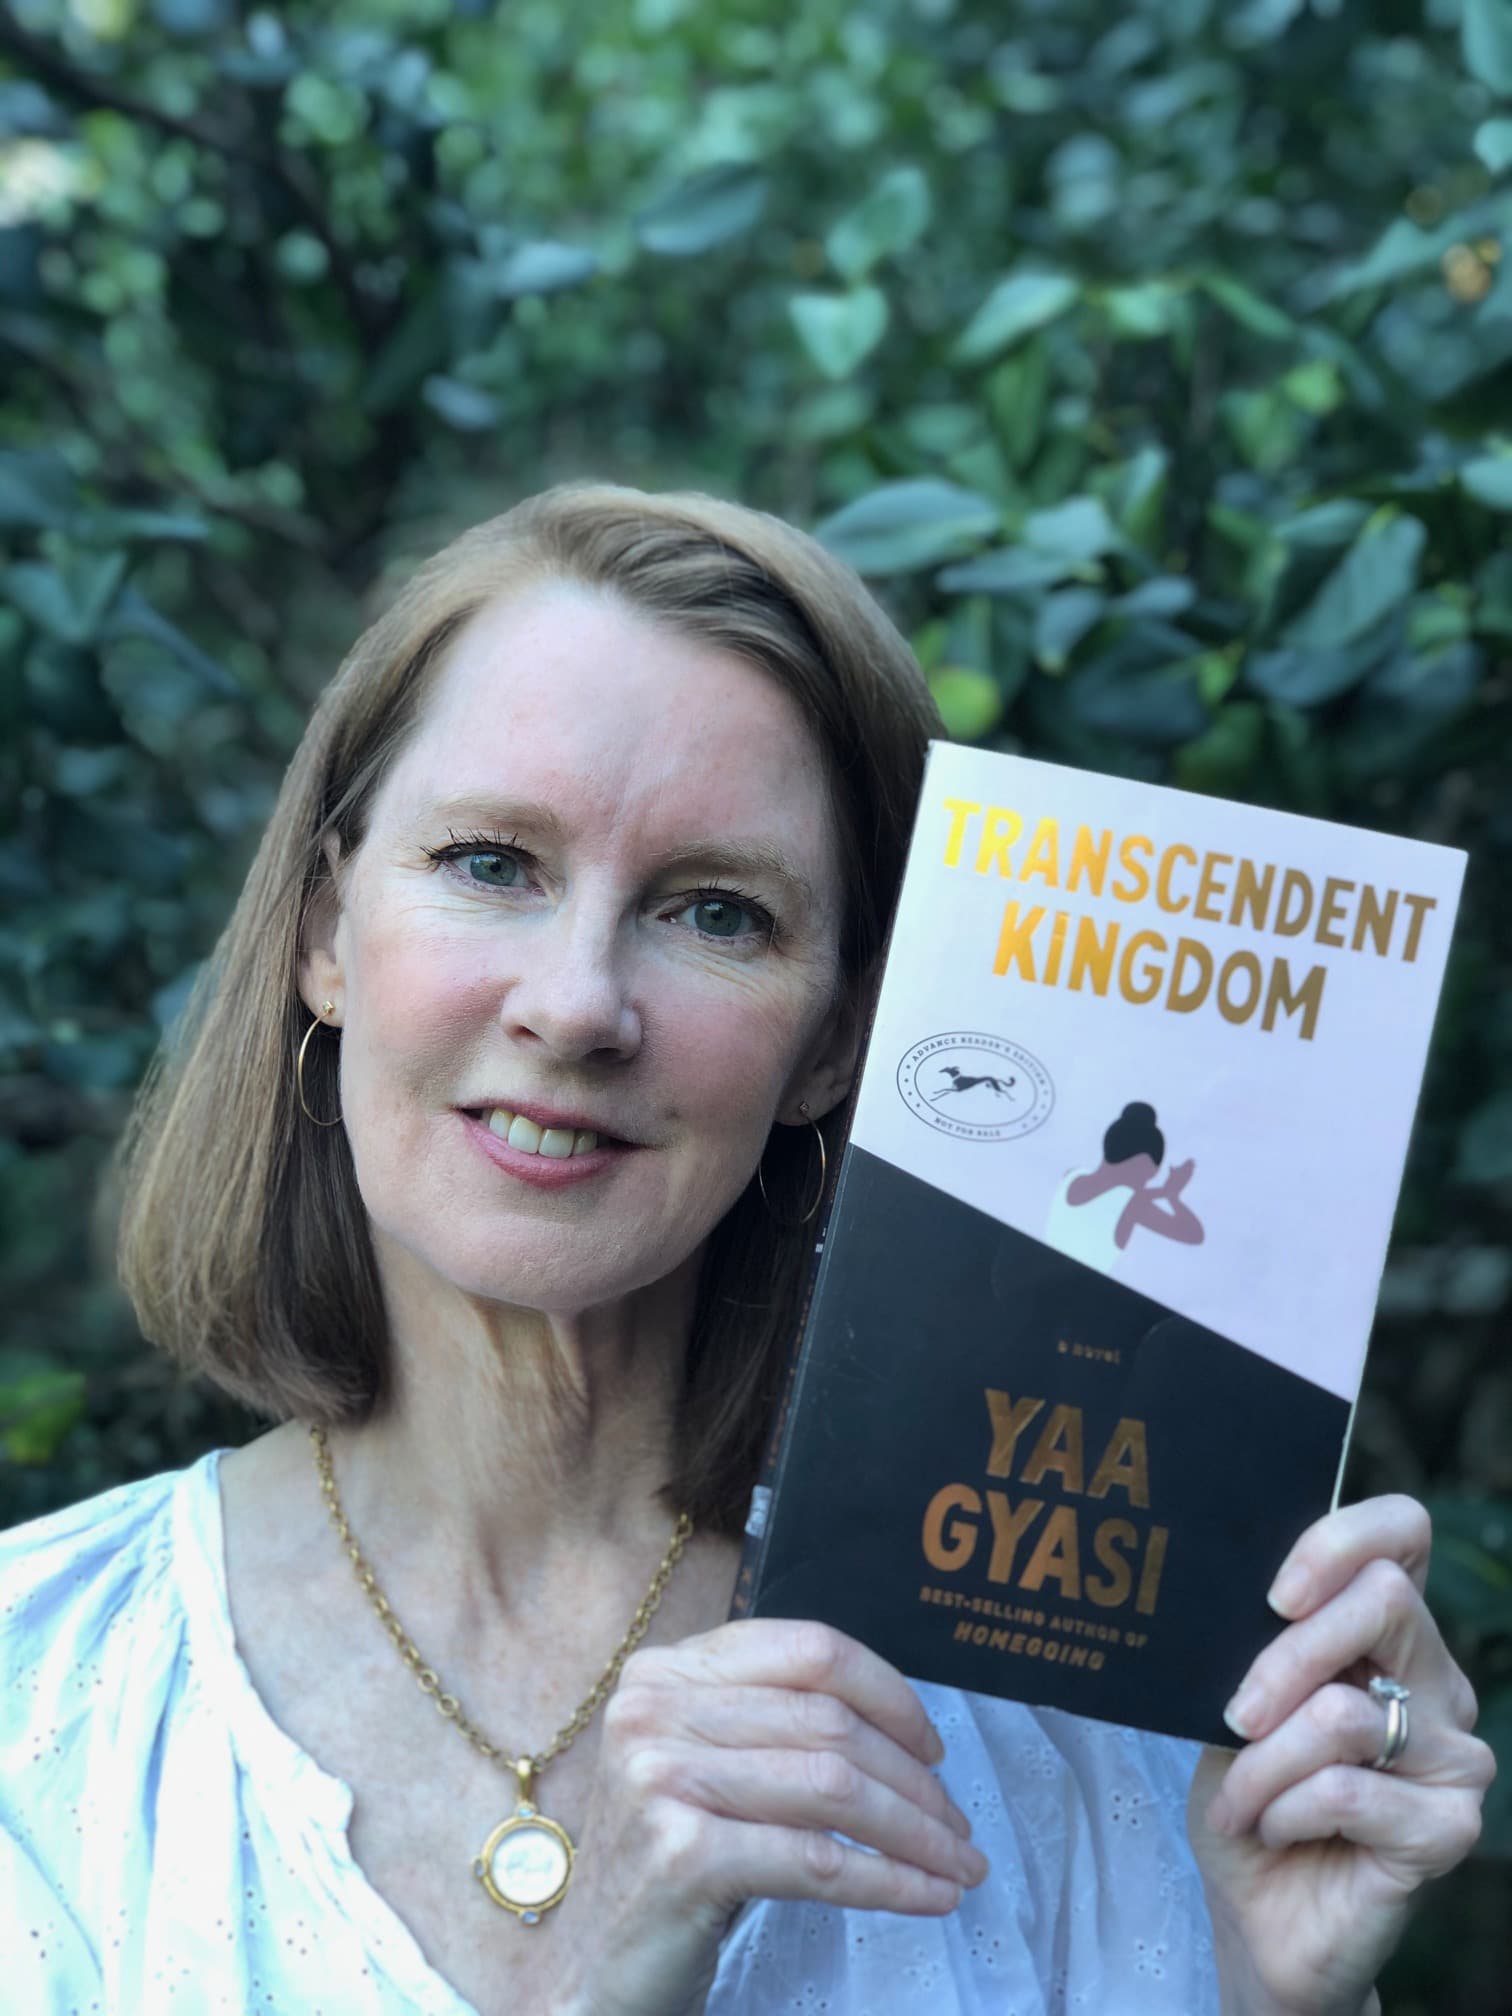 Gretchen holding the Transcendent Kingdom book cover